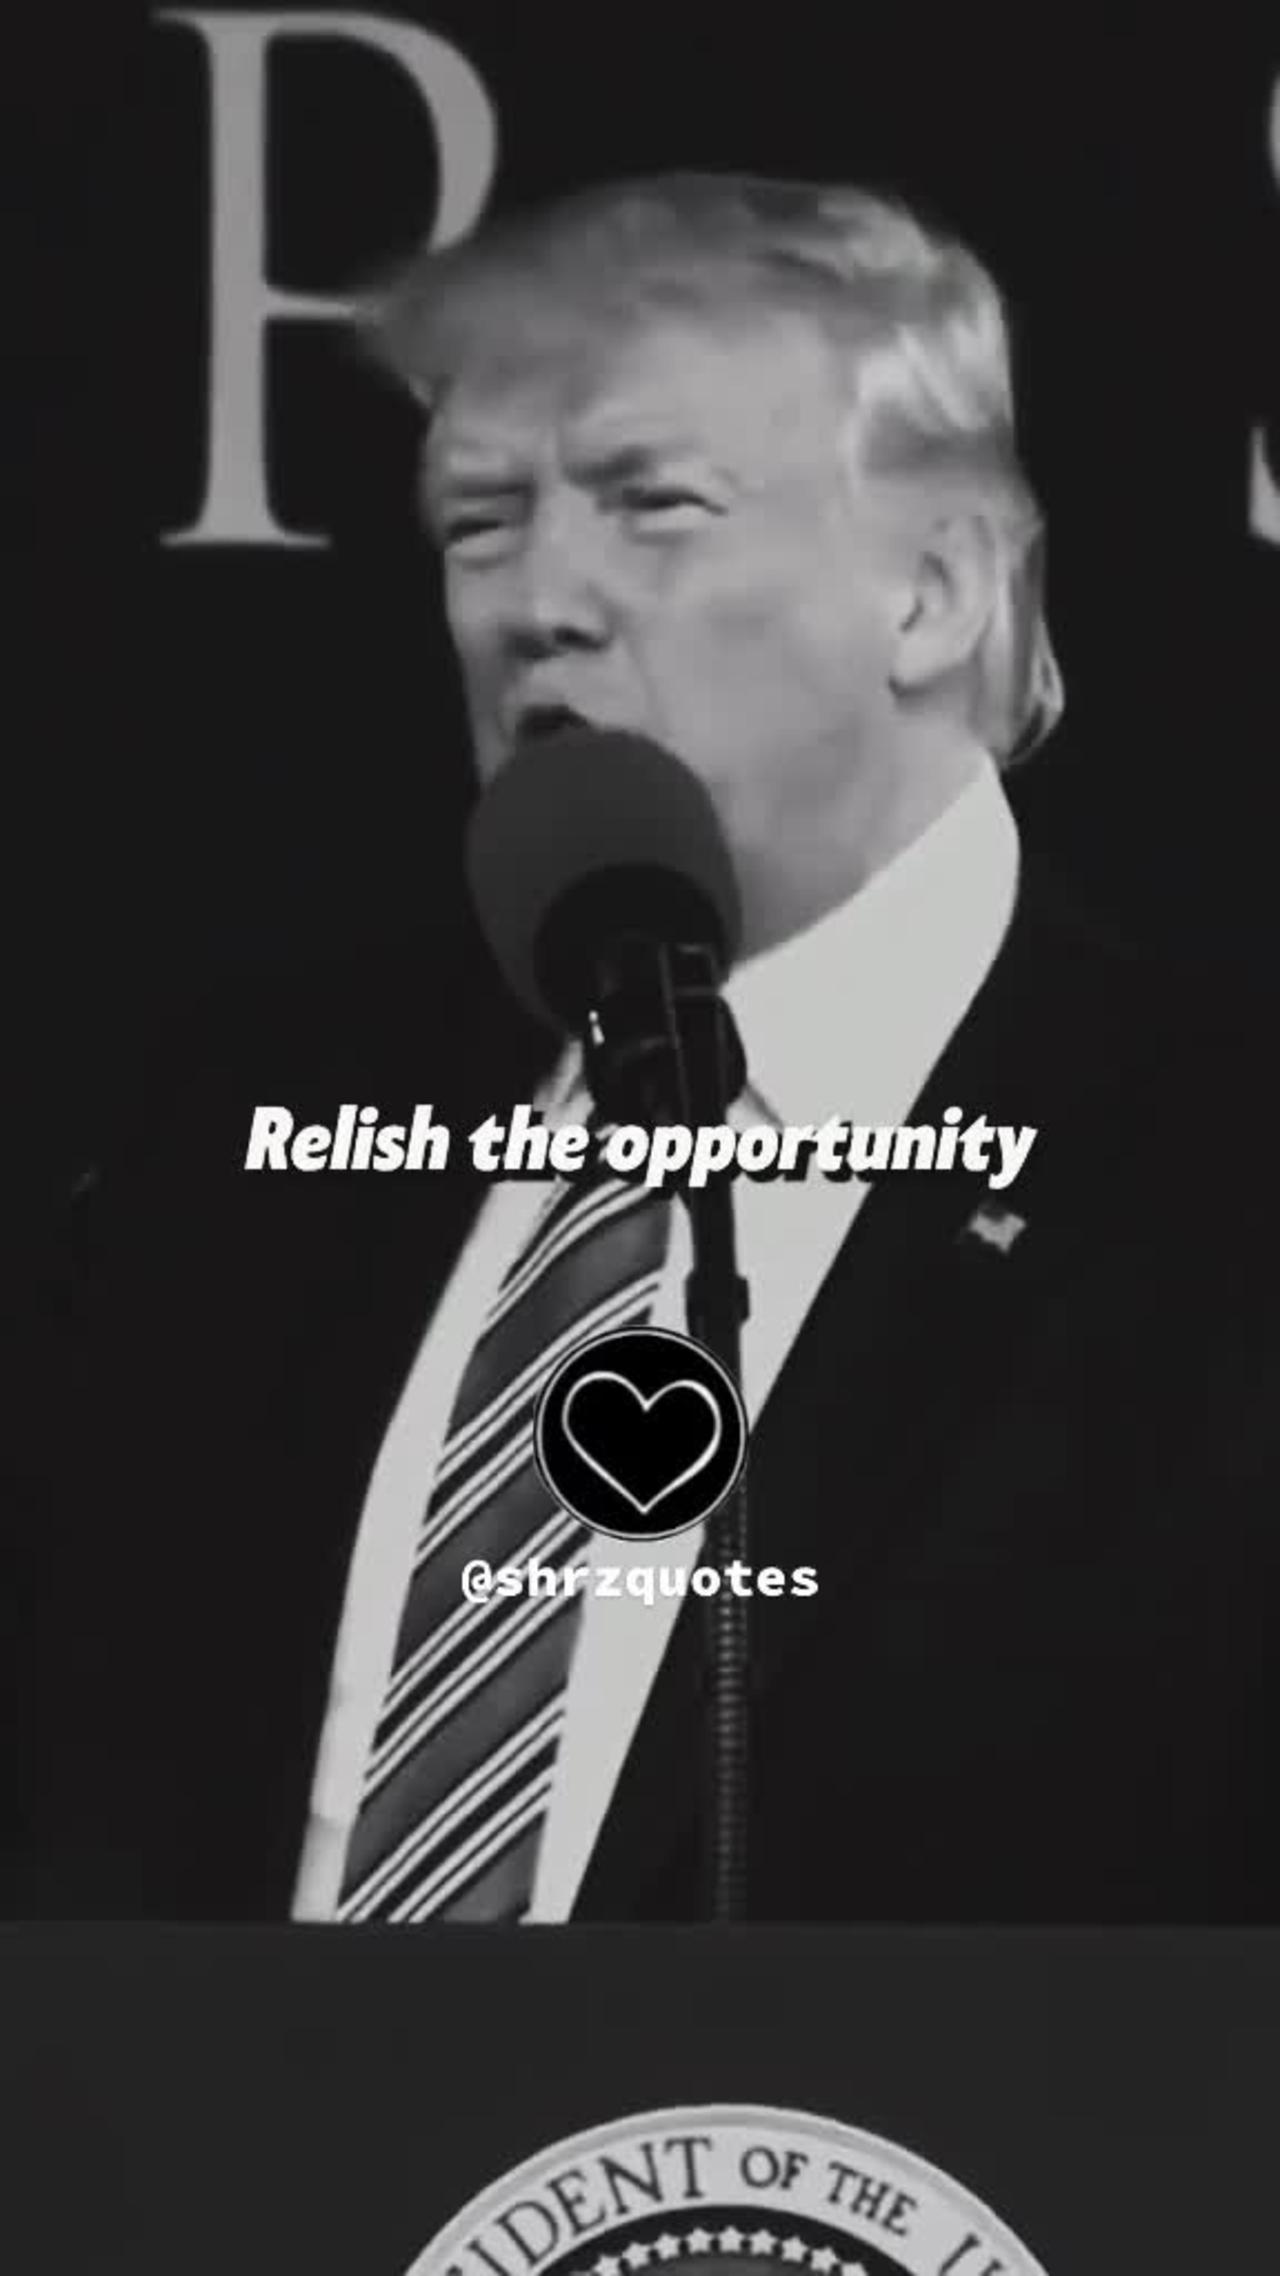 Donald Trump's amazing speech!!